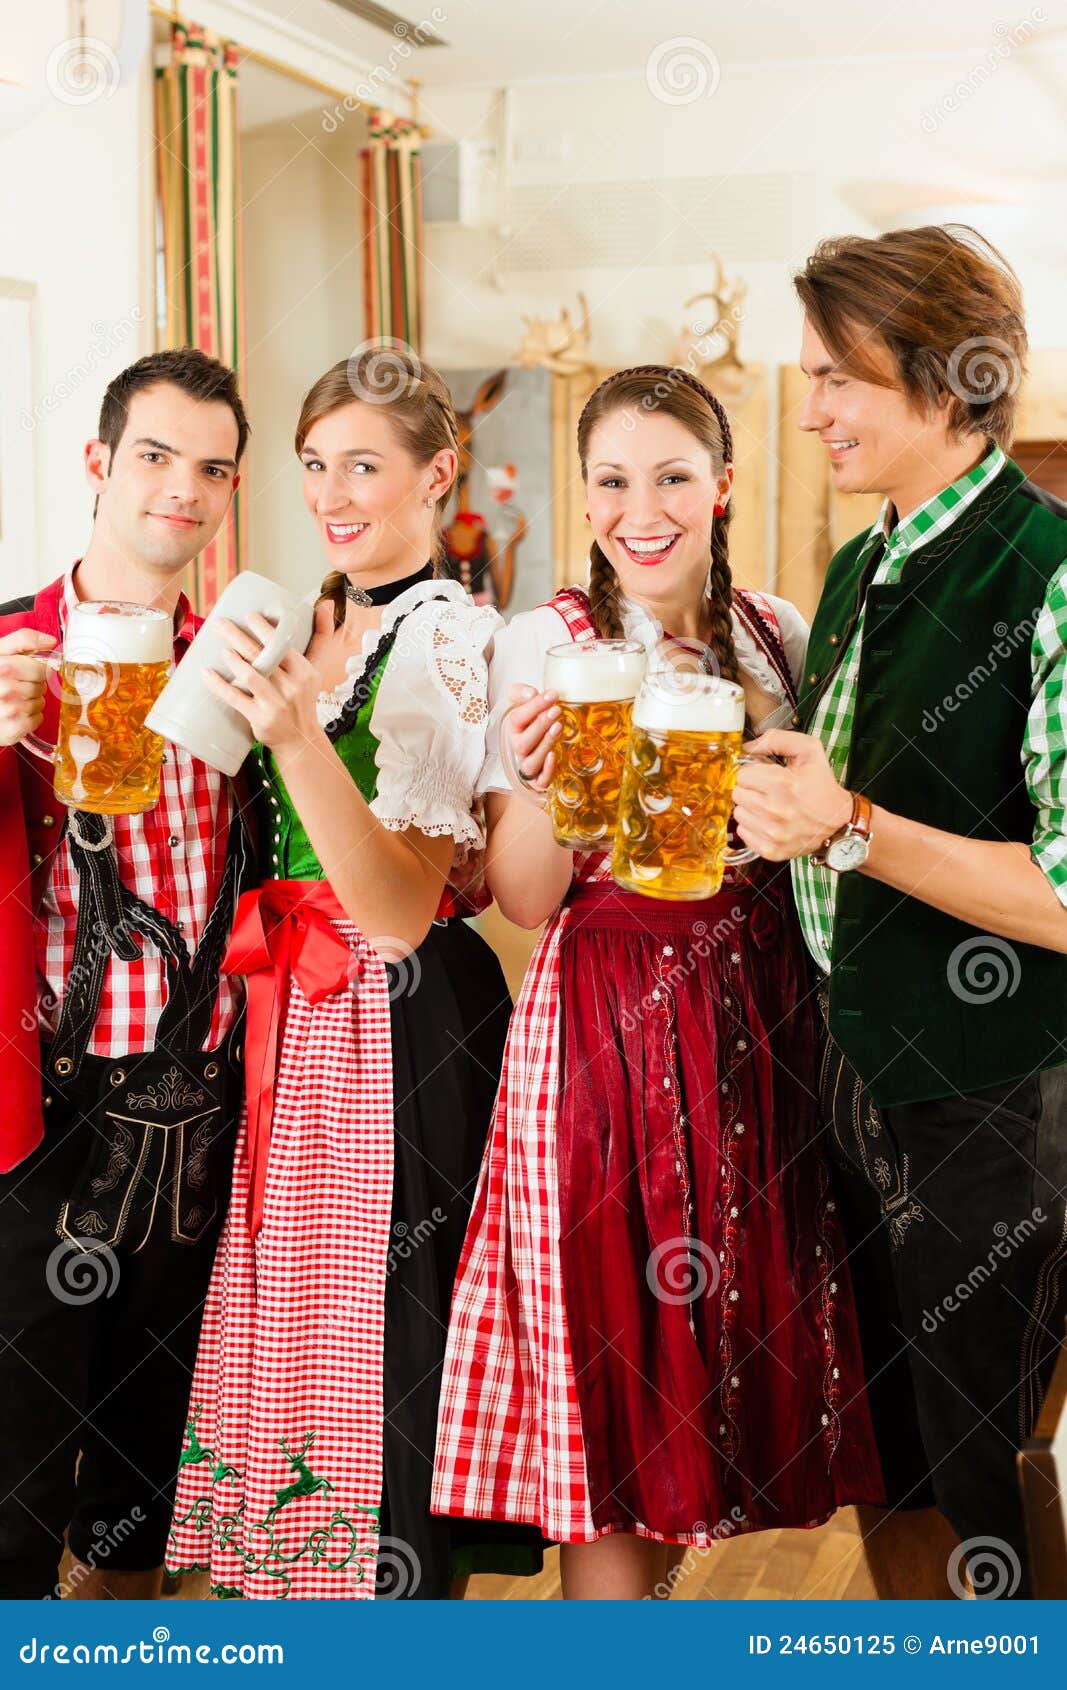 Bavarian dating